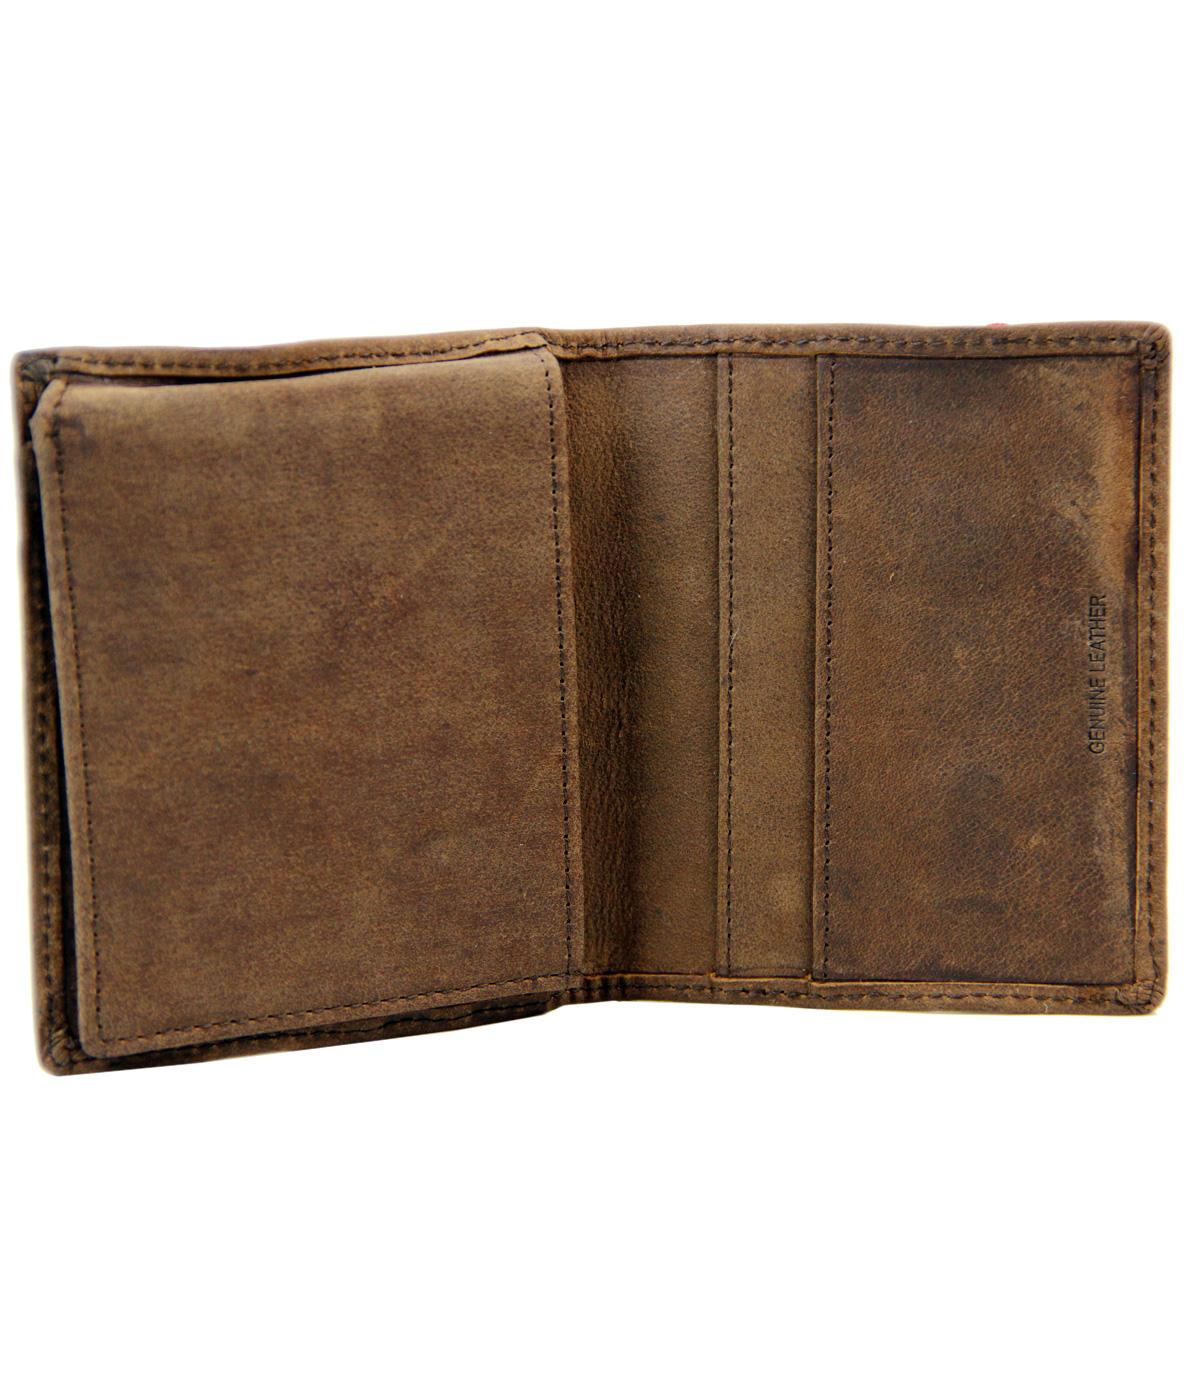 ORIGINAL PENGUIN Retro Leather Bi Fold Wallet in Tan